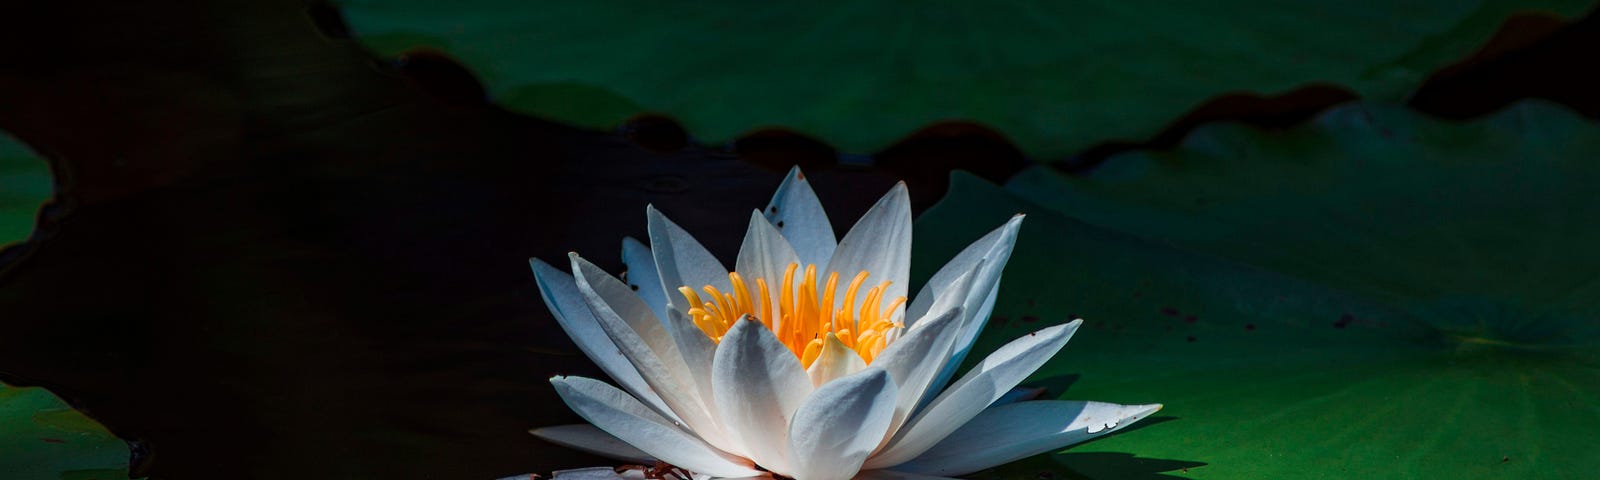 a blue lotus flower floating on calm, dark water